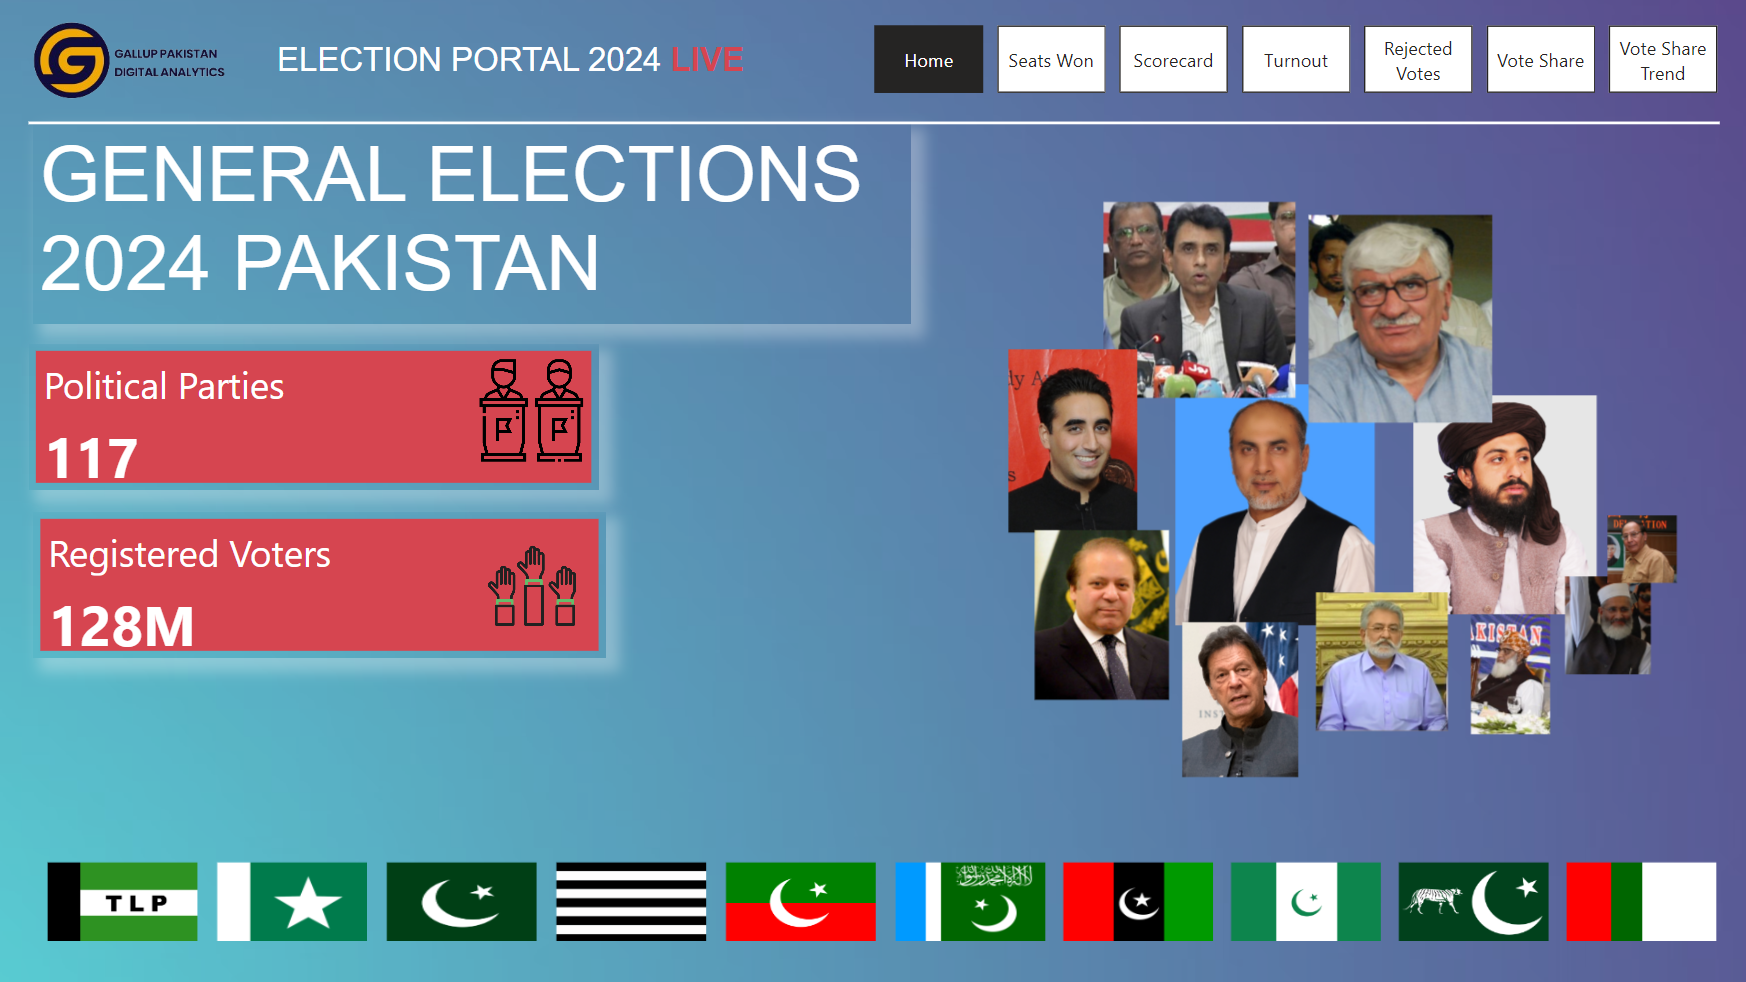 GENERAL ELECTIONS 2024 PAKISTAN DASHBOARD Gallup Pakistan Digital